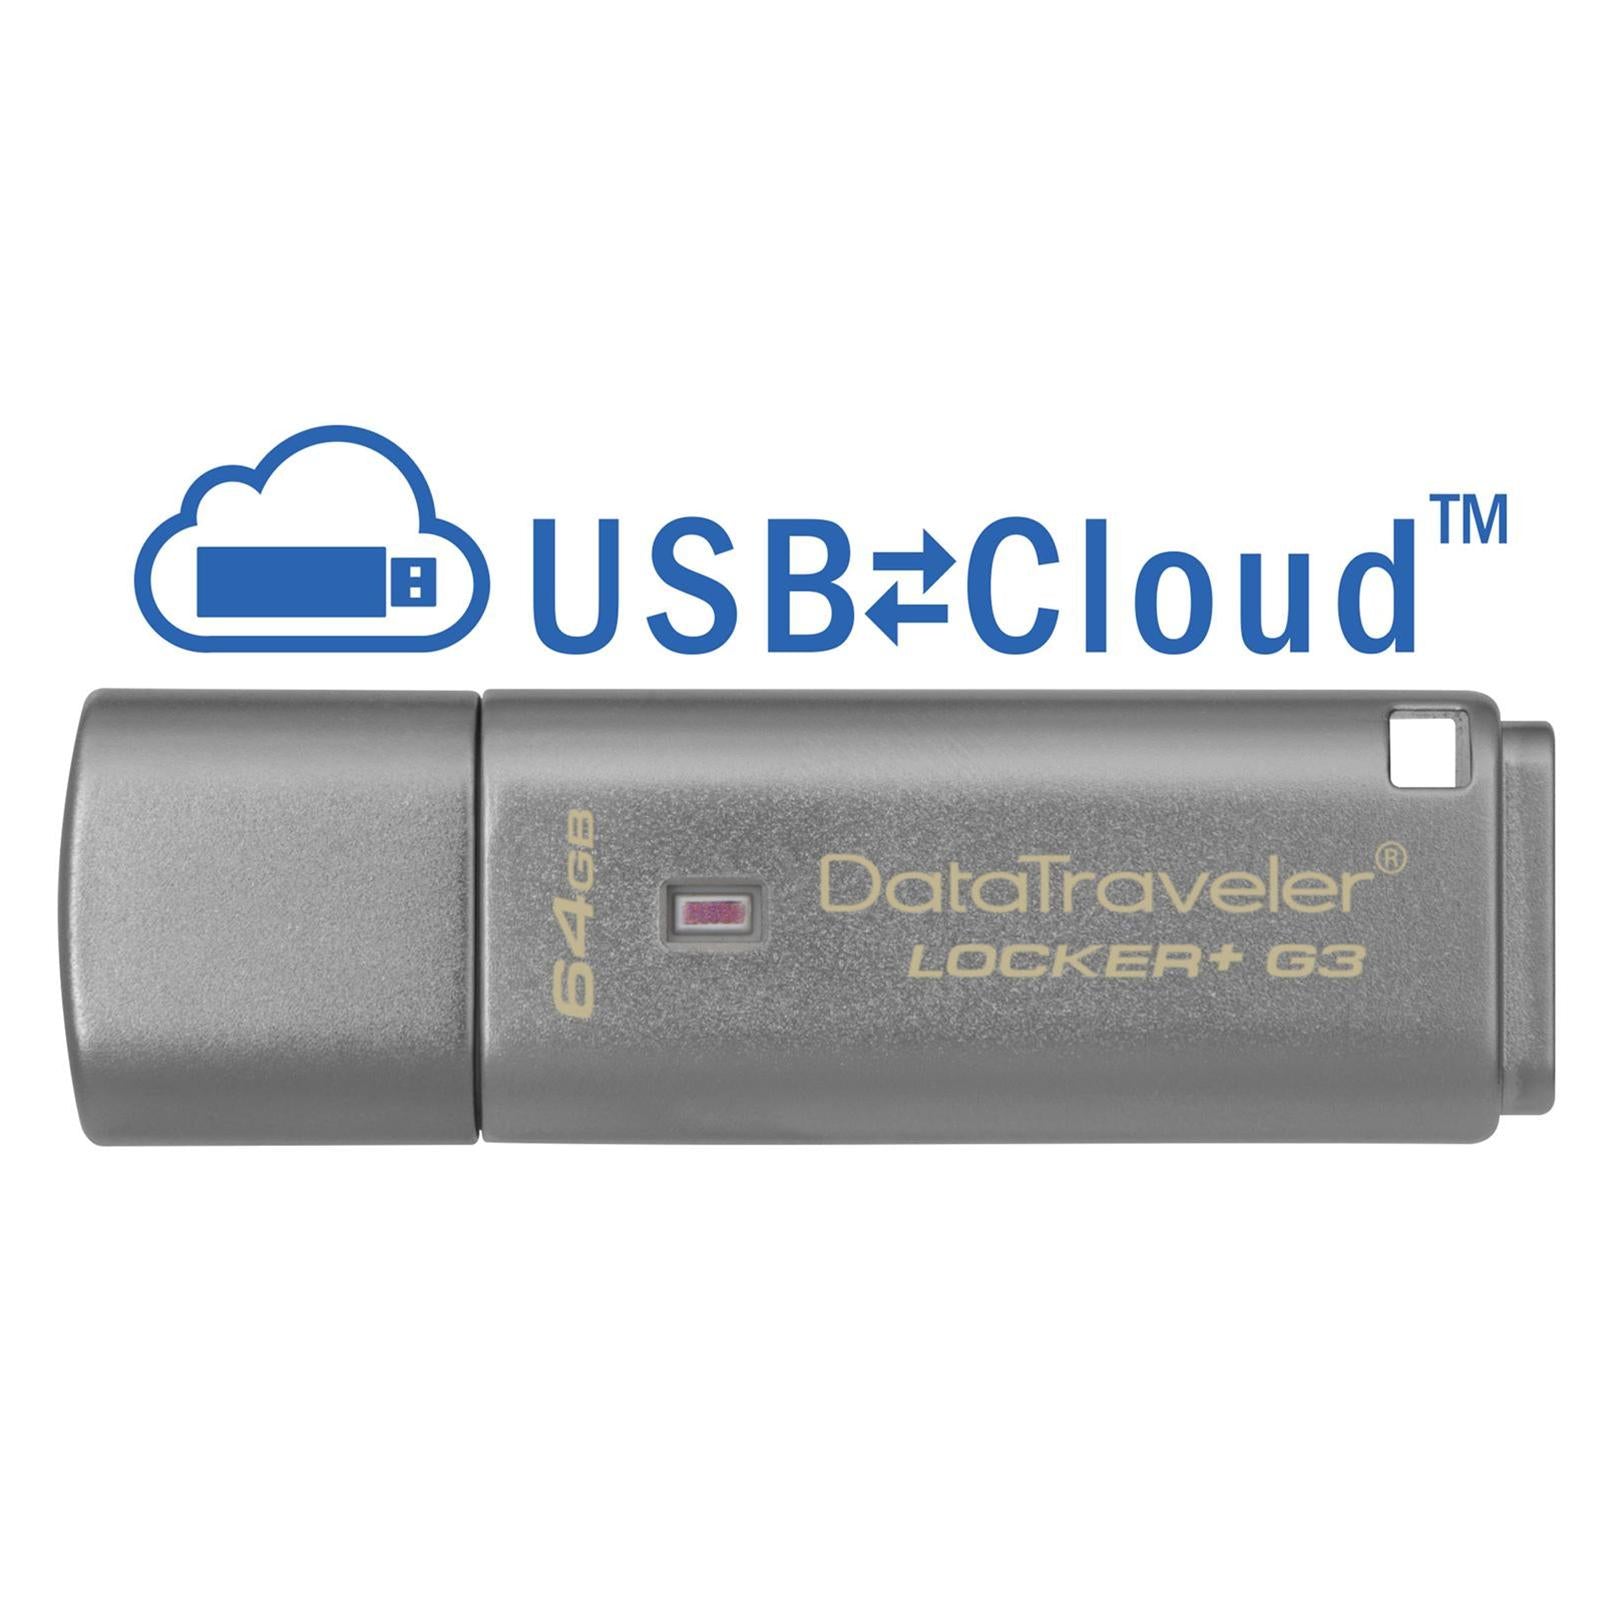 Kingston DataTraveler Locker+ G3 64GB USB 3.0 Silver 256 AES Encrypted USB Flash Drive